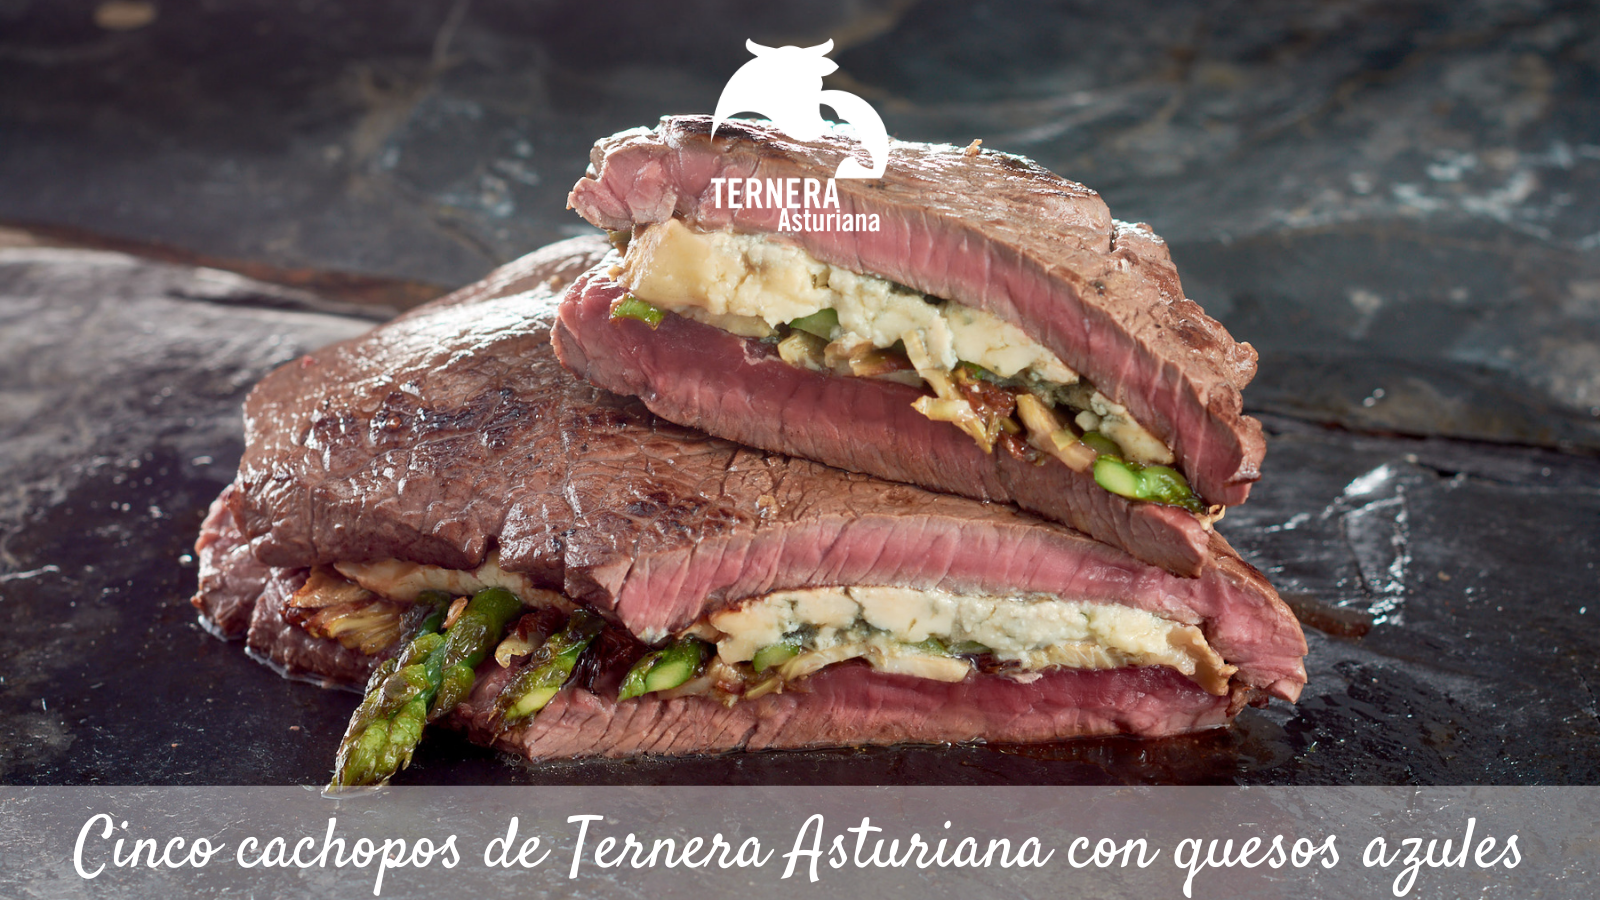 Cinco cachopos de Ternera Asturiana con quesos azules